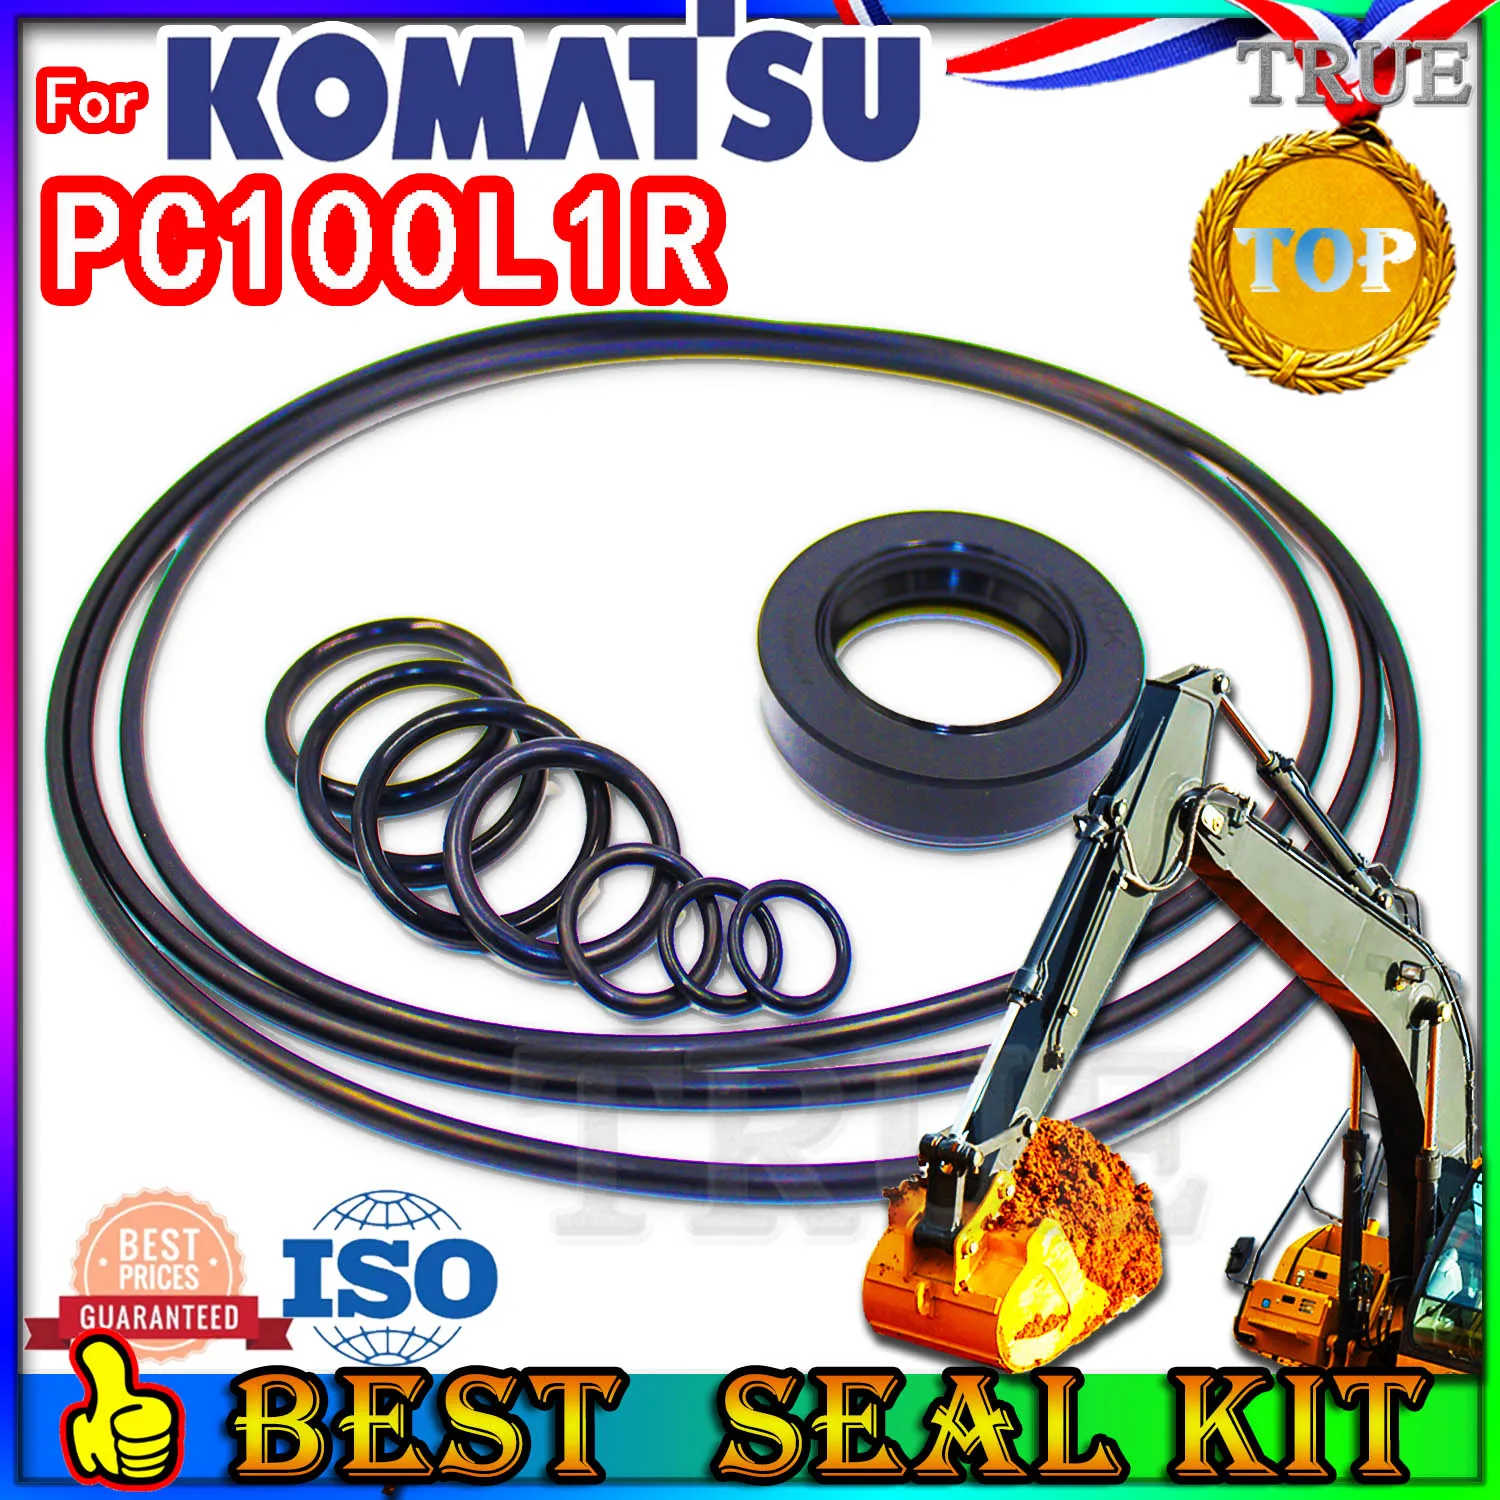 

For KOMATSU PC100L1R Oil Seal Repair Kit Boom Arm Bucket Excavator Hydraulic Cylinder ZENOAH Control Pilot Valve Blade TRAVEL